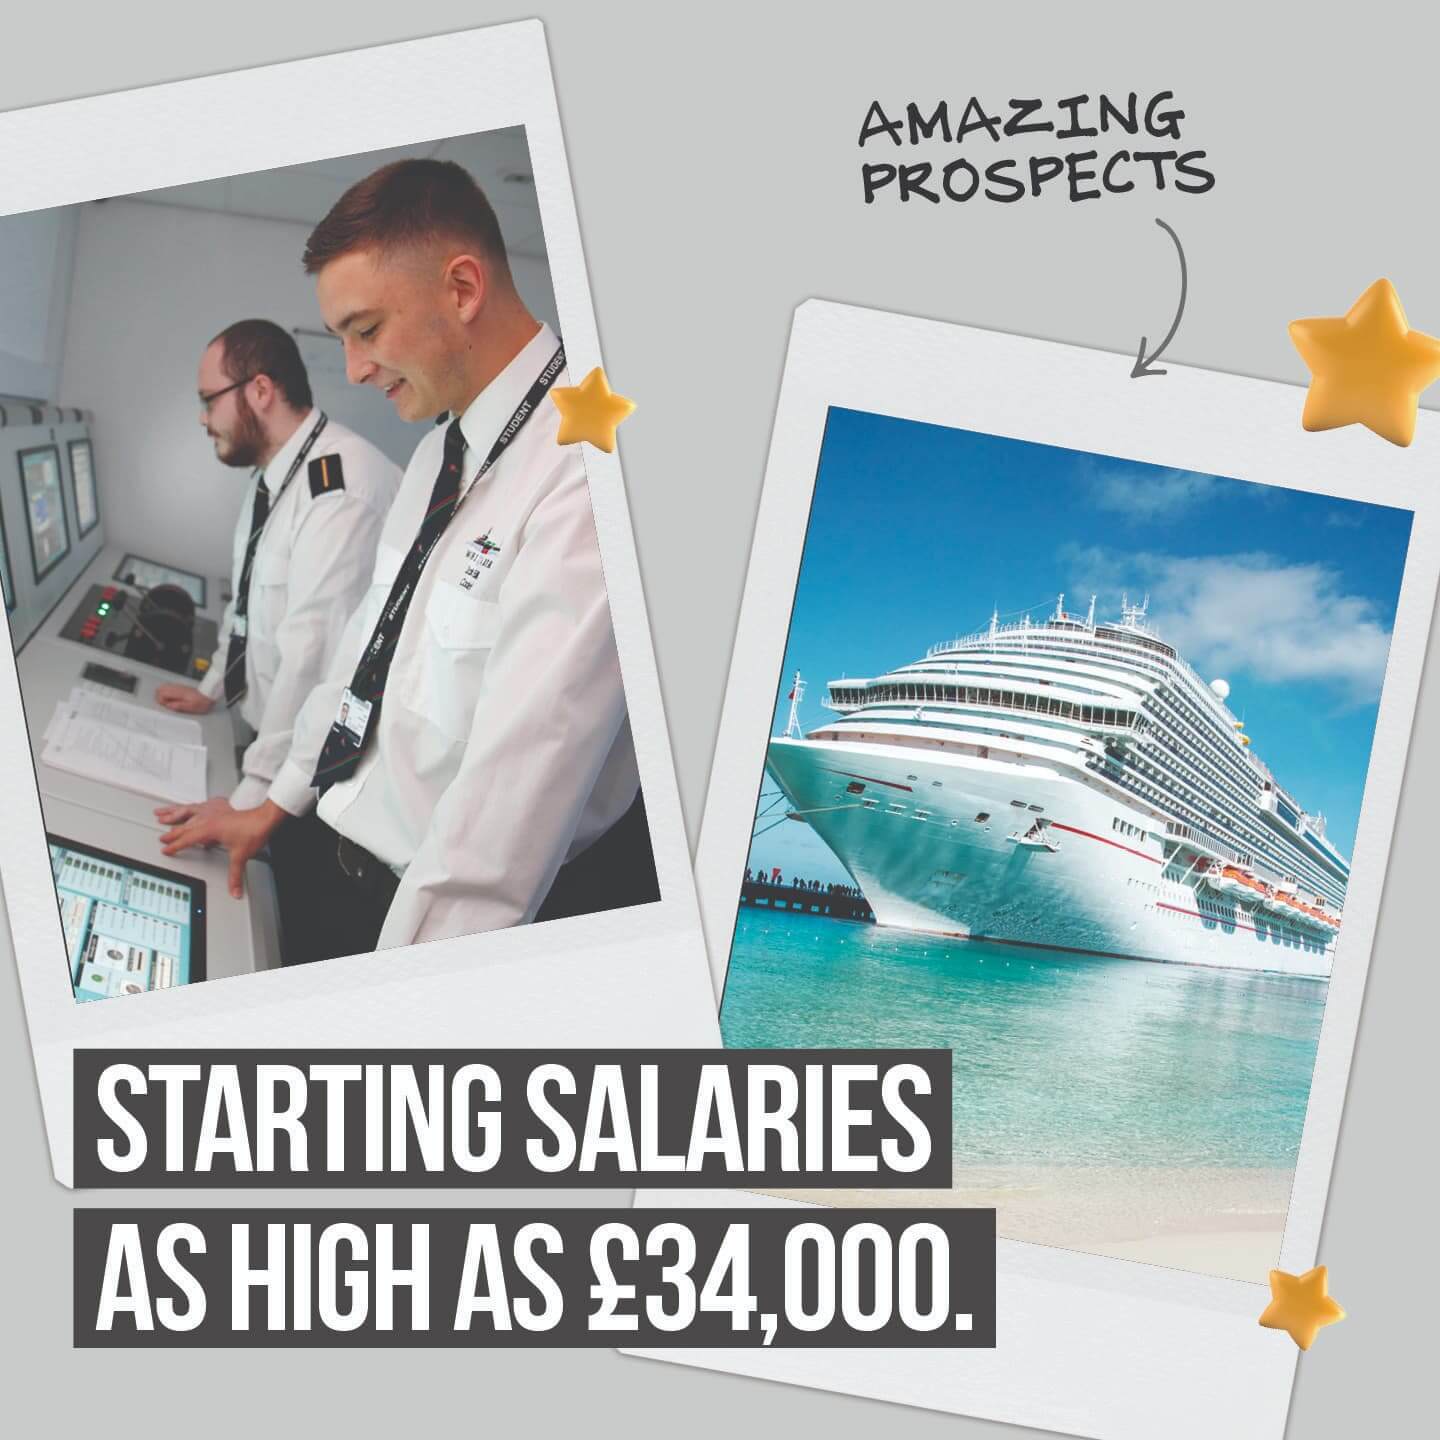 Maritime - Starting salaries as high as £34,000